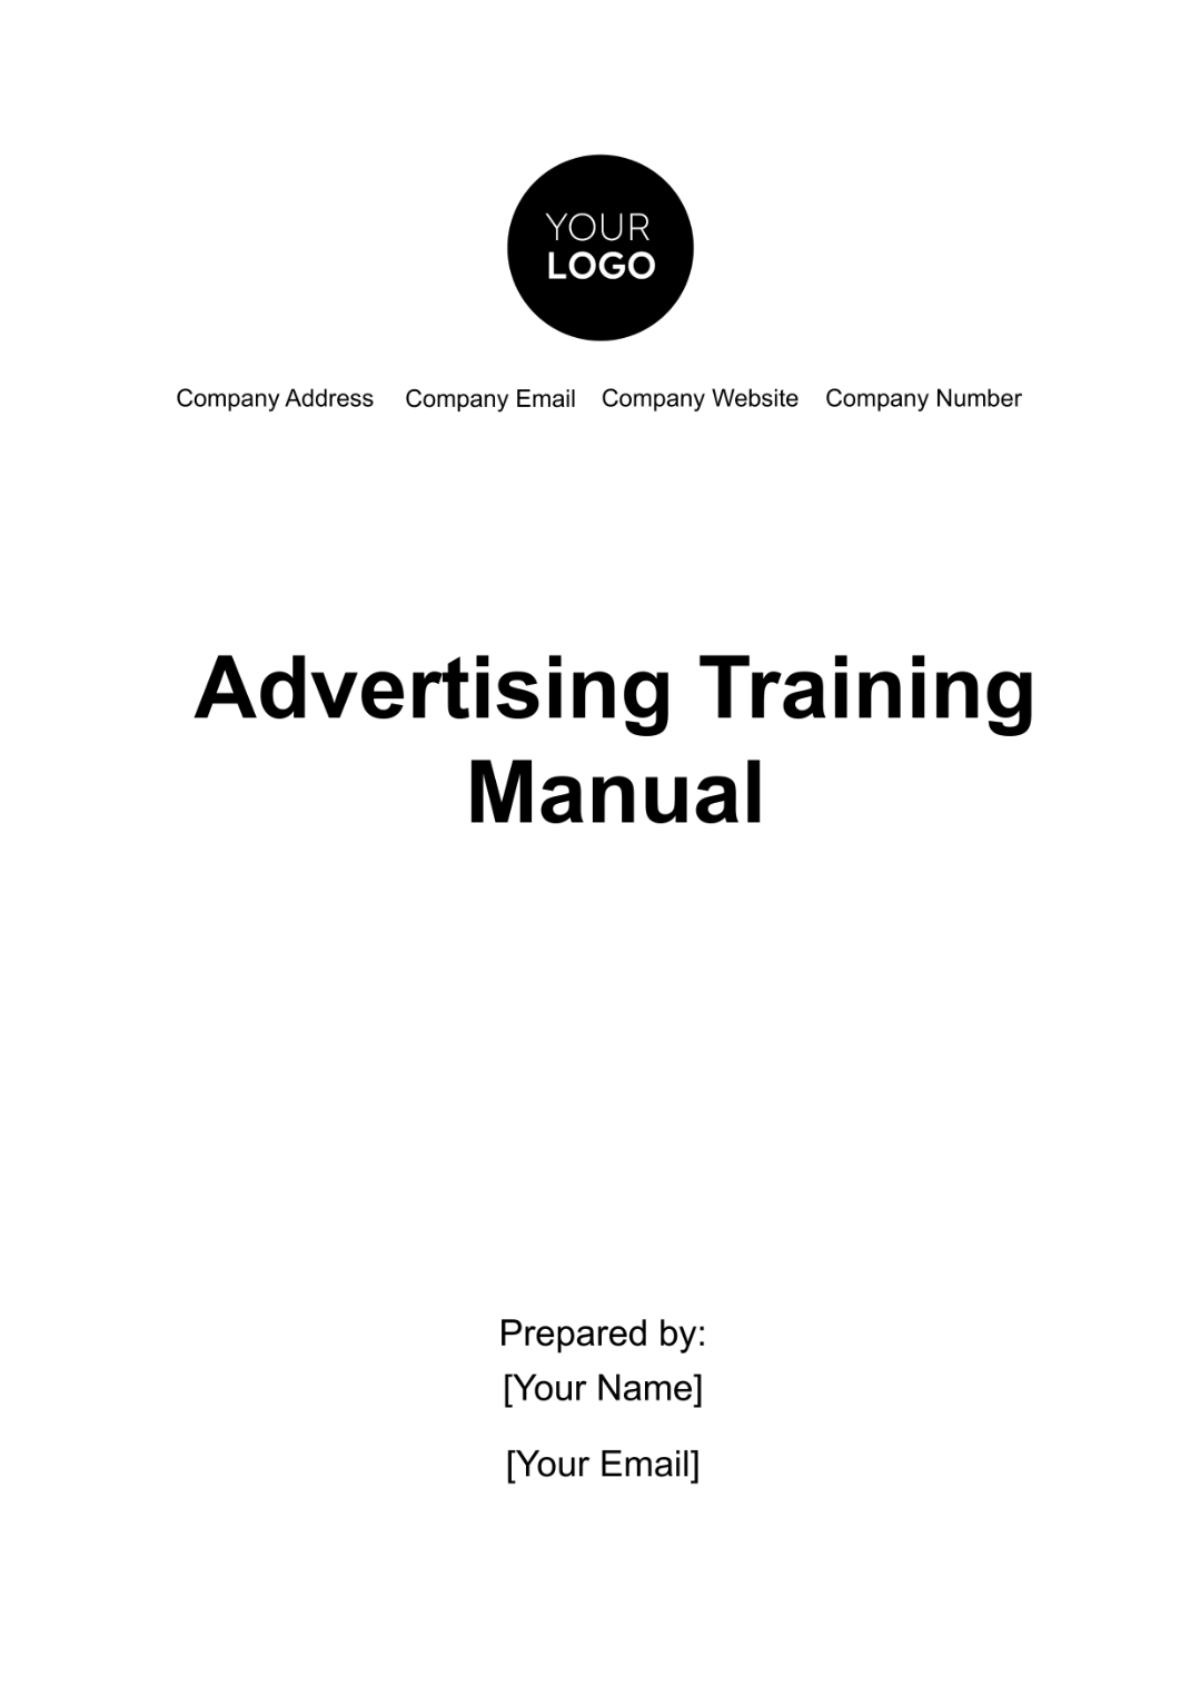 Free Advertising Training Manual Template